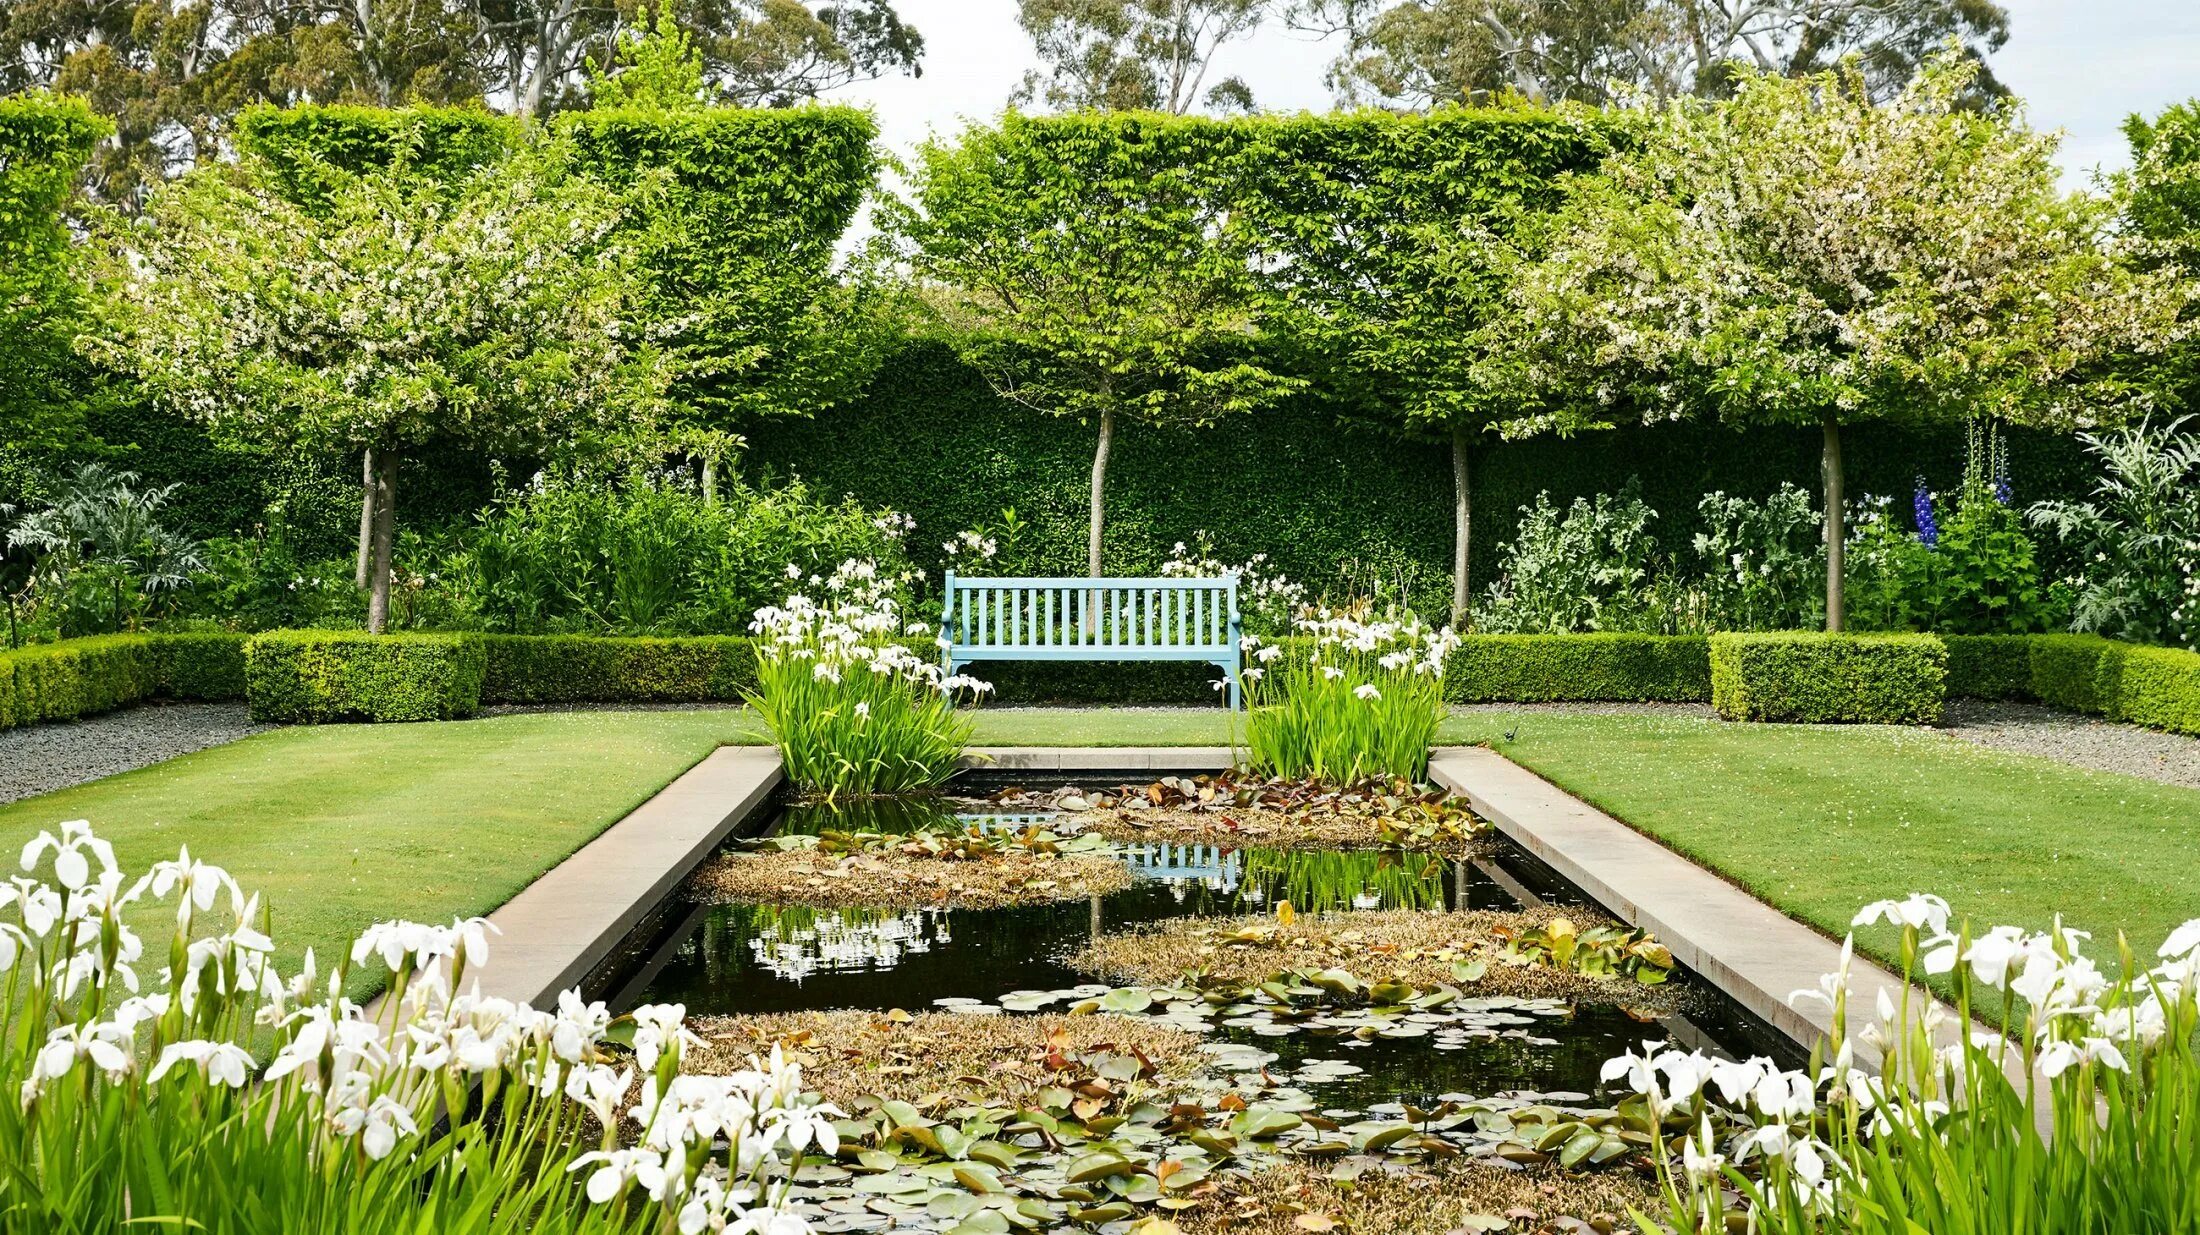 Сад модерн. Партерный сад пруд французский стиль. Ландшафтный дизайнер Хью Гарден. Сад ландшафт английский классический стиль патио.